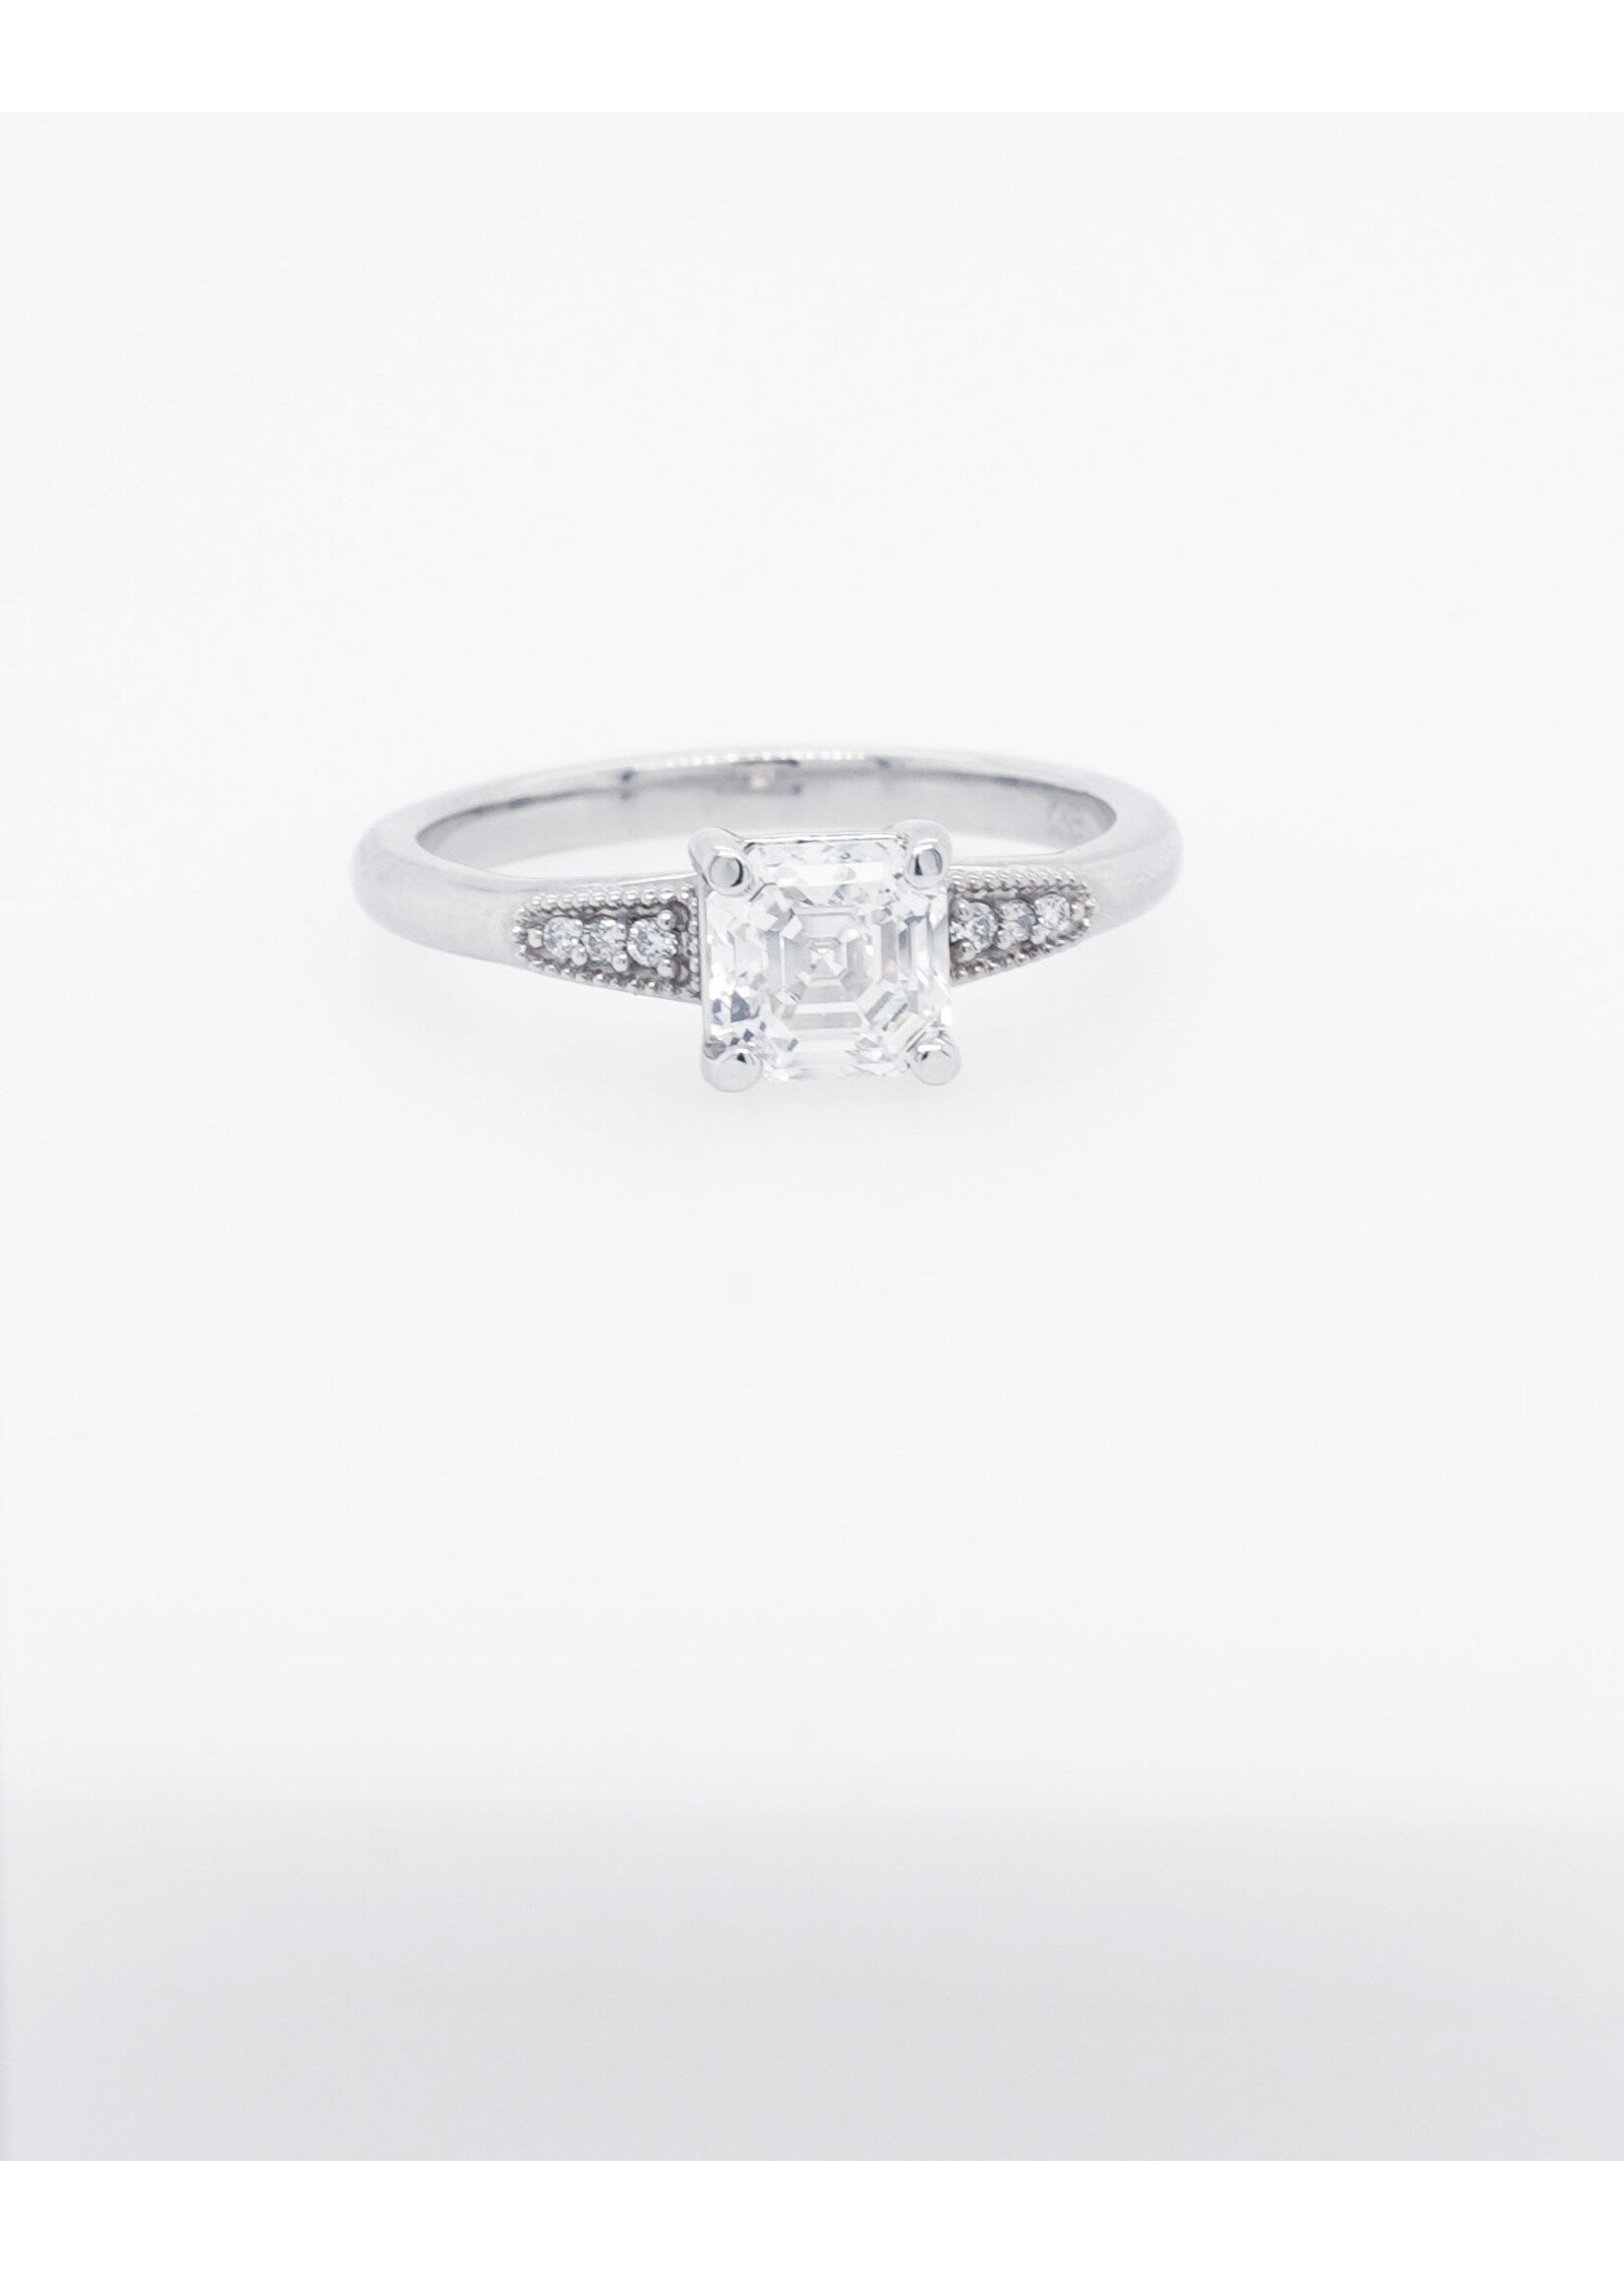 14KW 3.19g 1.20ctw (1.14ctr) F/VS1 GIA Asscher Cut Diamond Engagement Ring (size 6.34)